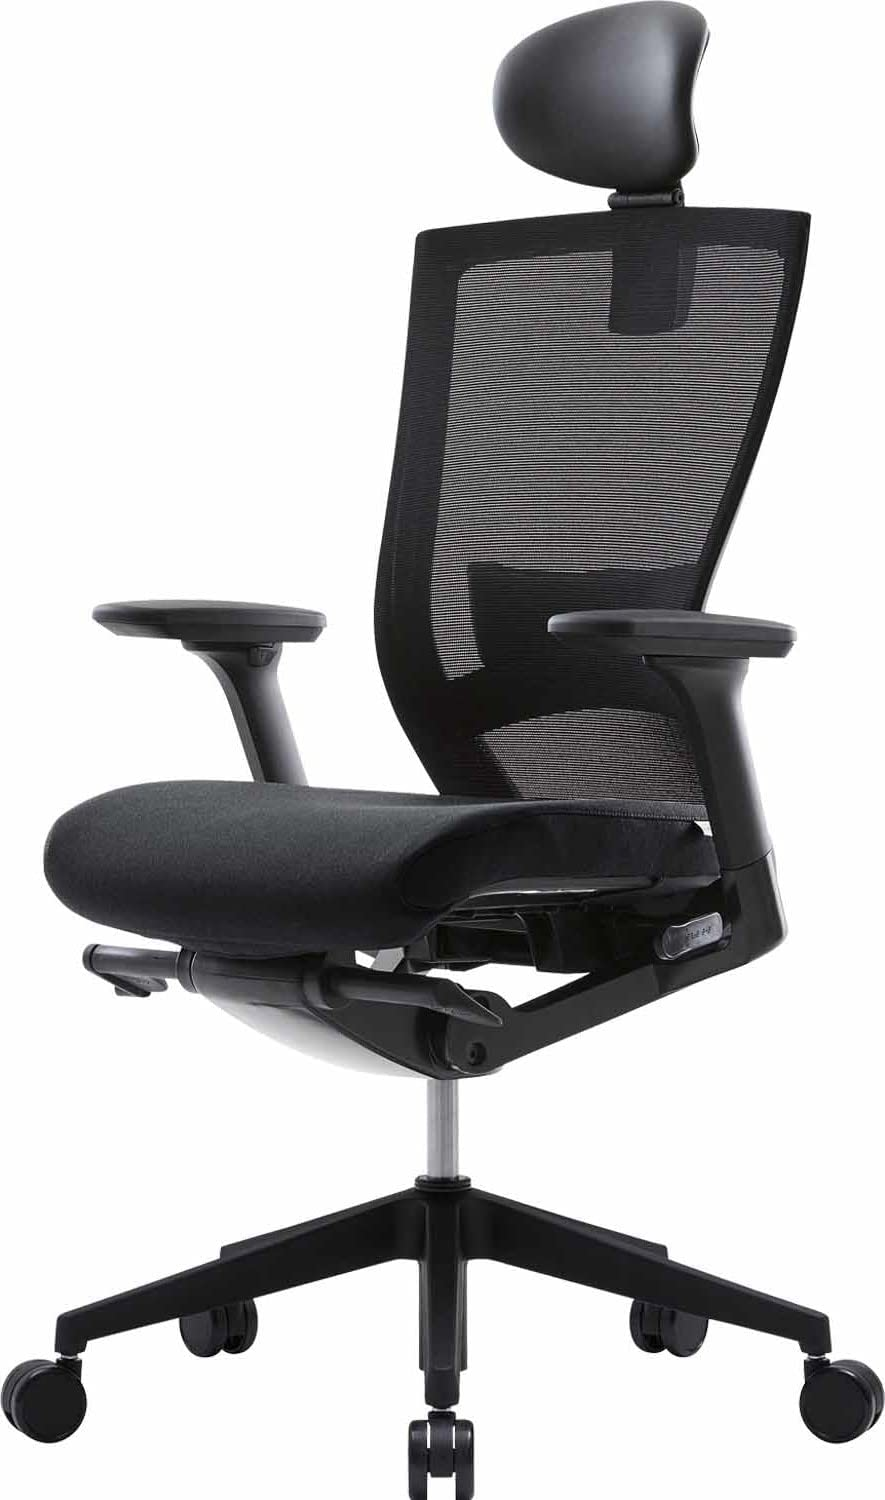 SIDIZ T50 - Best office chair for tailbone pain